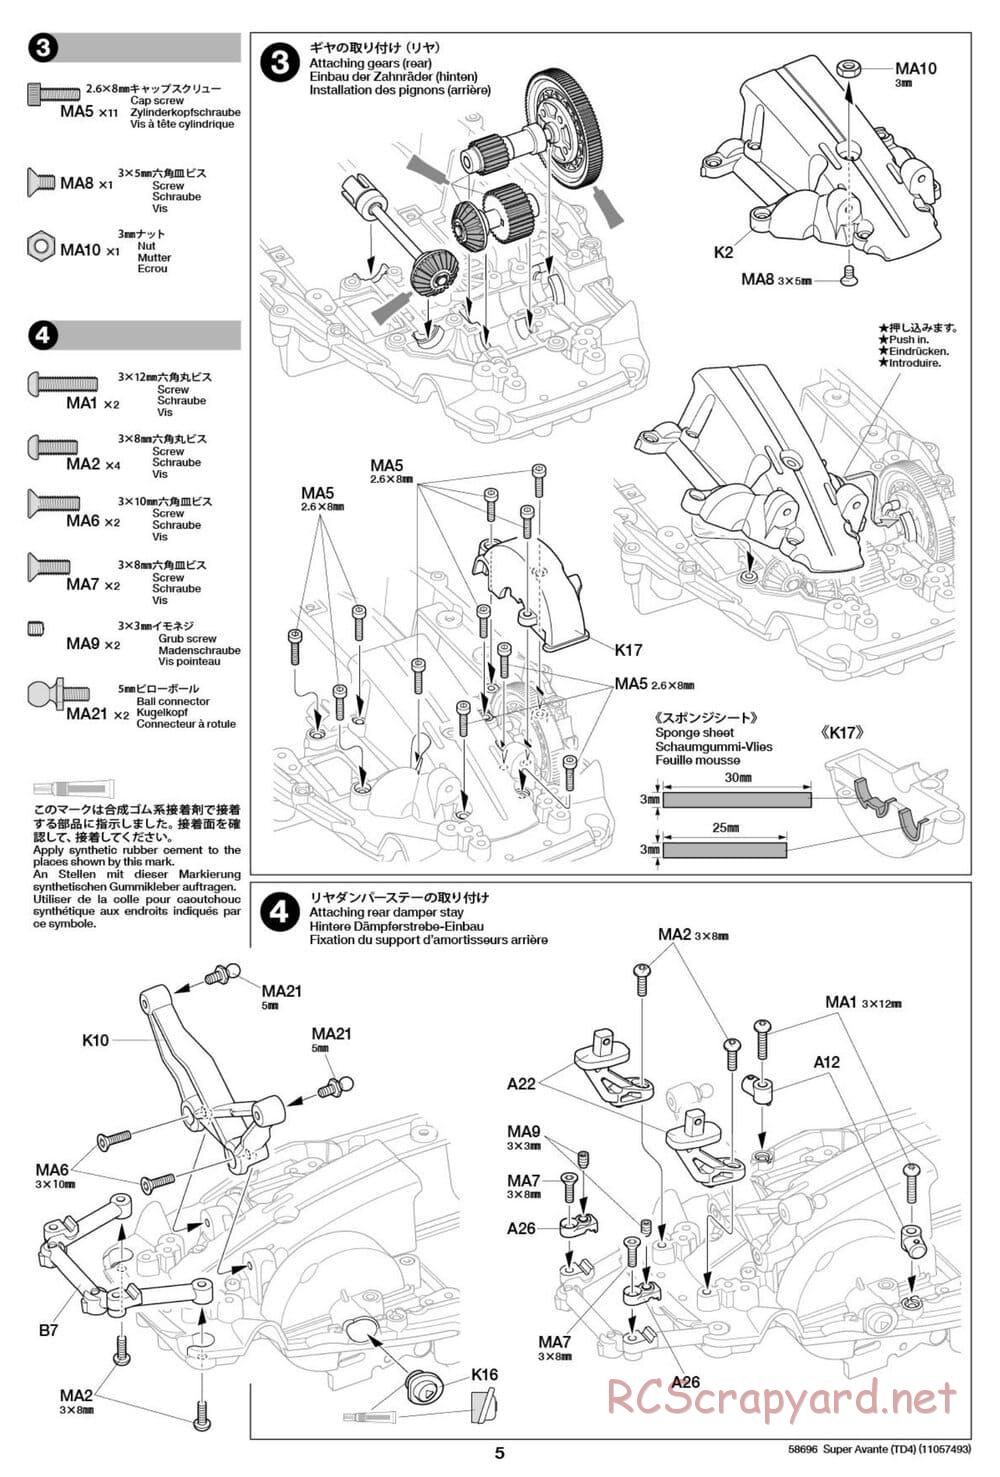 Tamiya - Super Avante - TD4 Chassis - Manual - Page 6